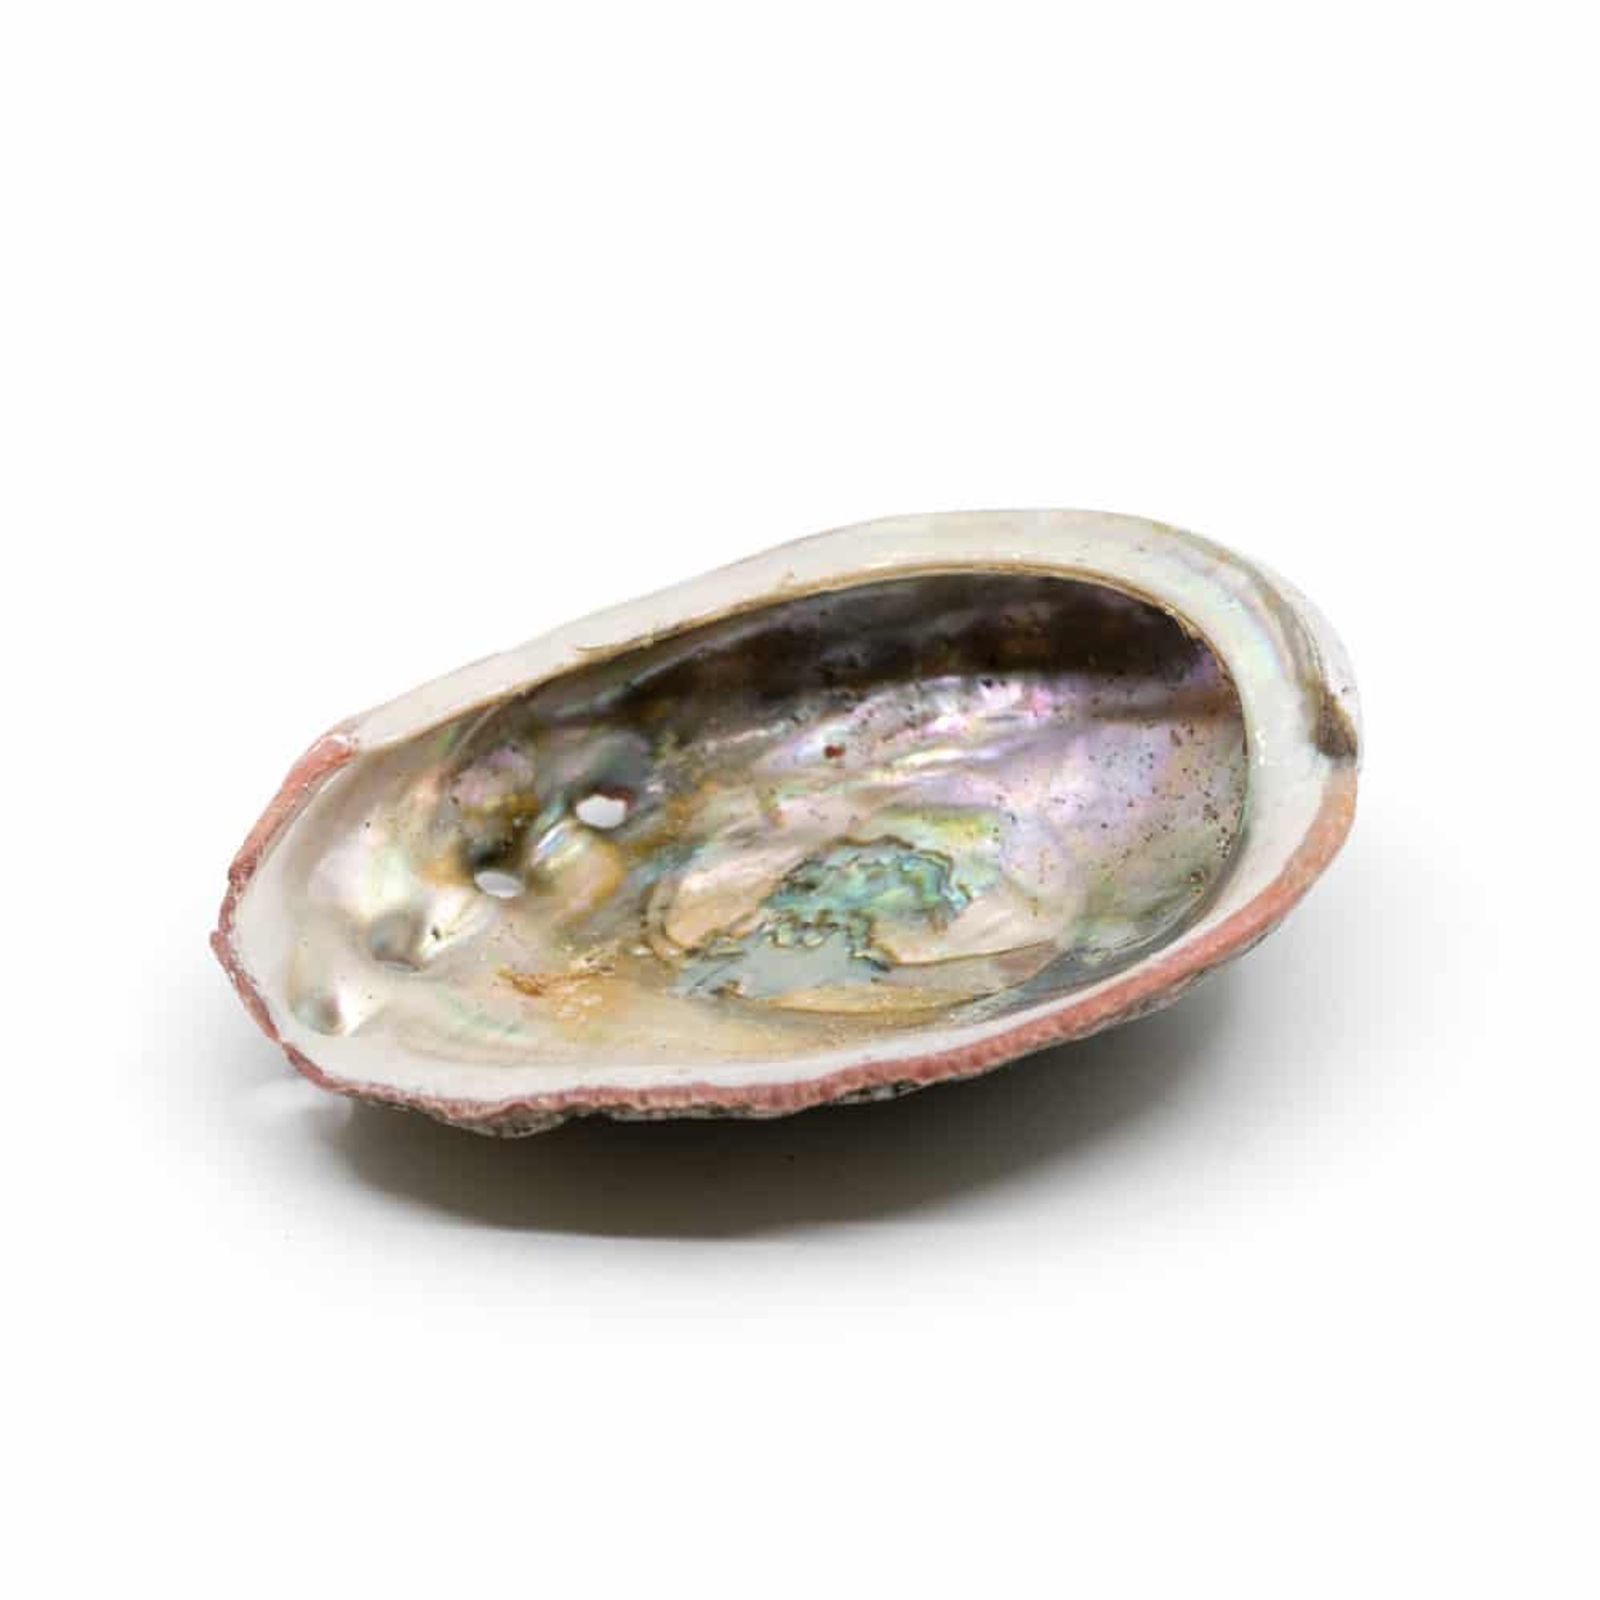 Abalone-Muschel- Medium - 70 bis 90 mm